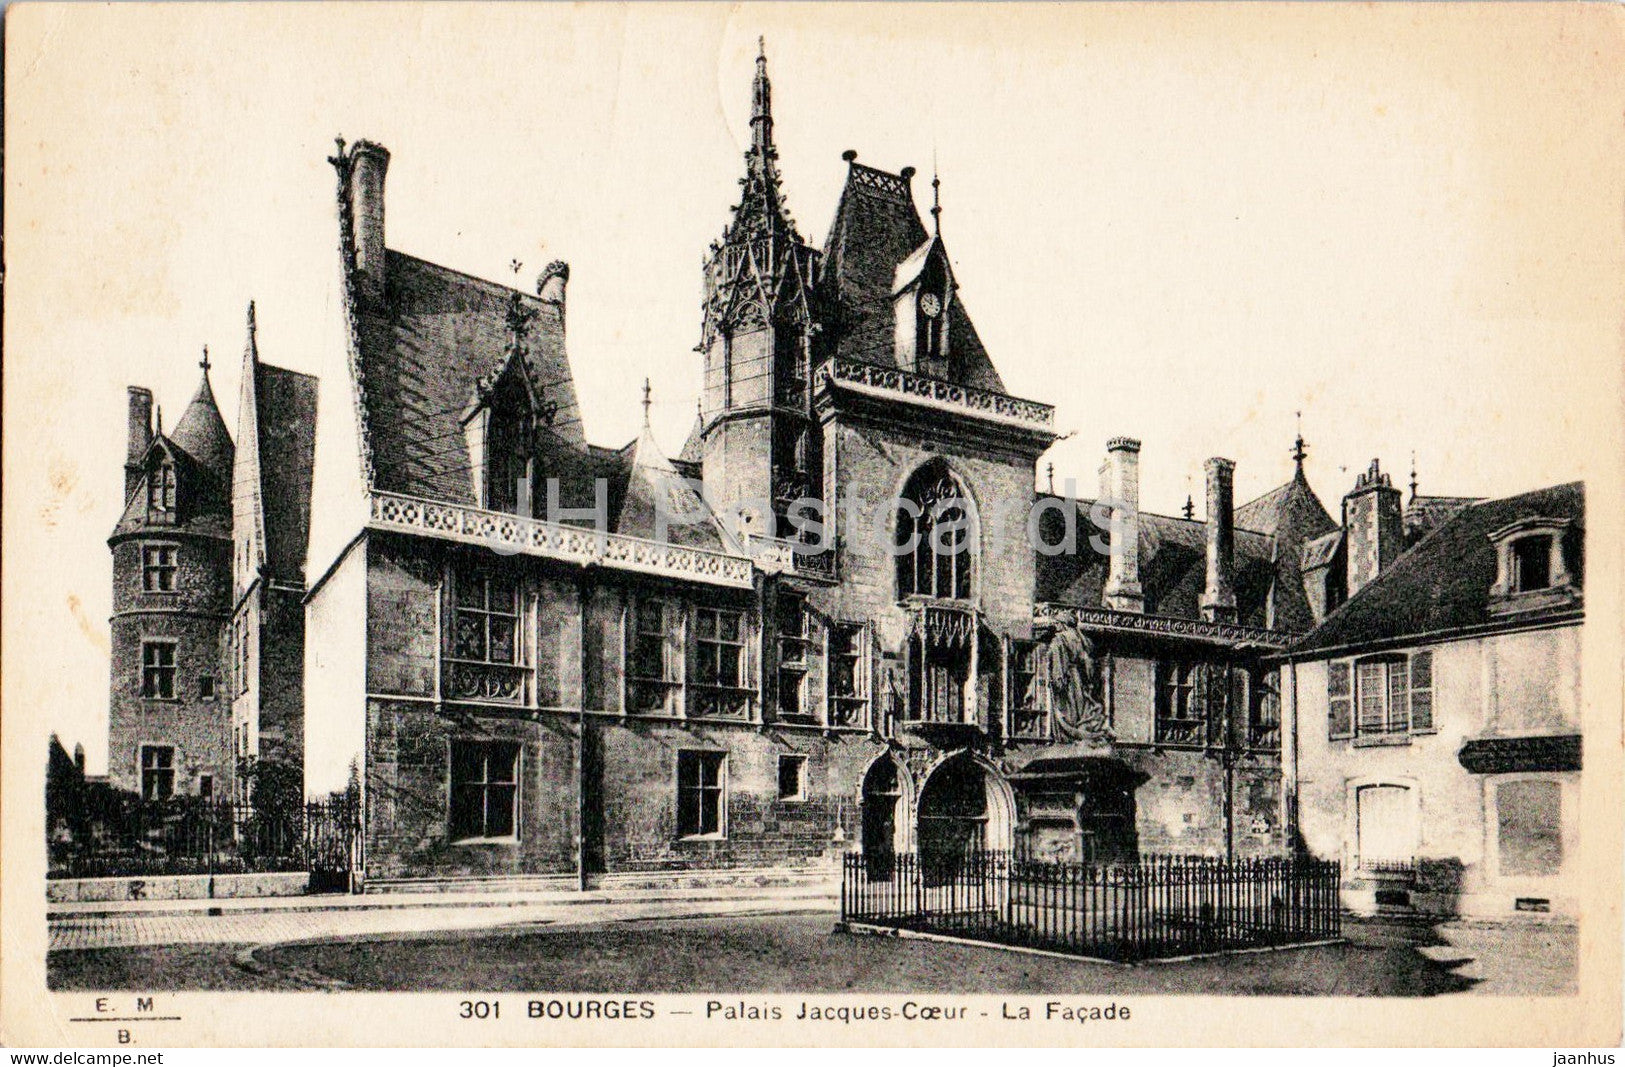 Bourges - Palais Jacques Coeur - La Facade - 301 - old postcard - 1936 - France - used - JH Postcards